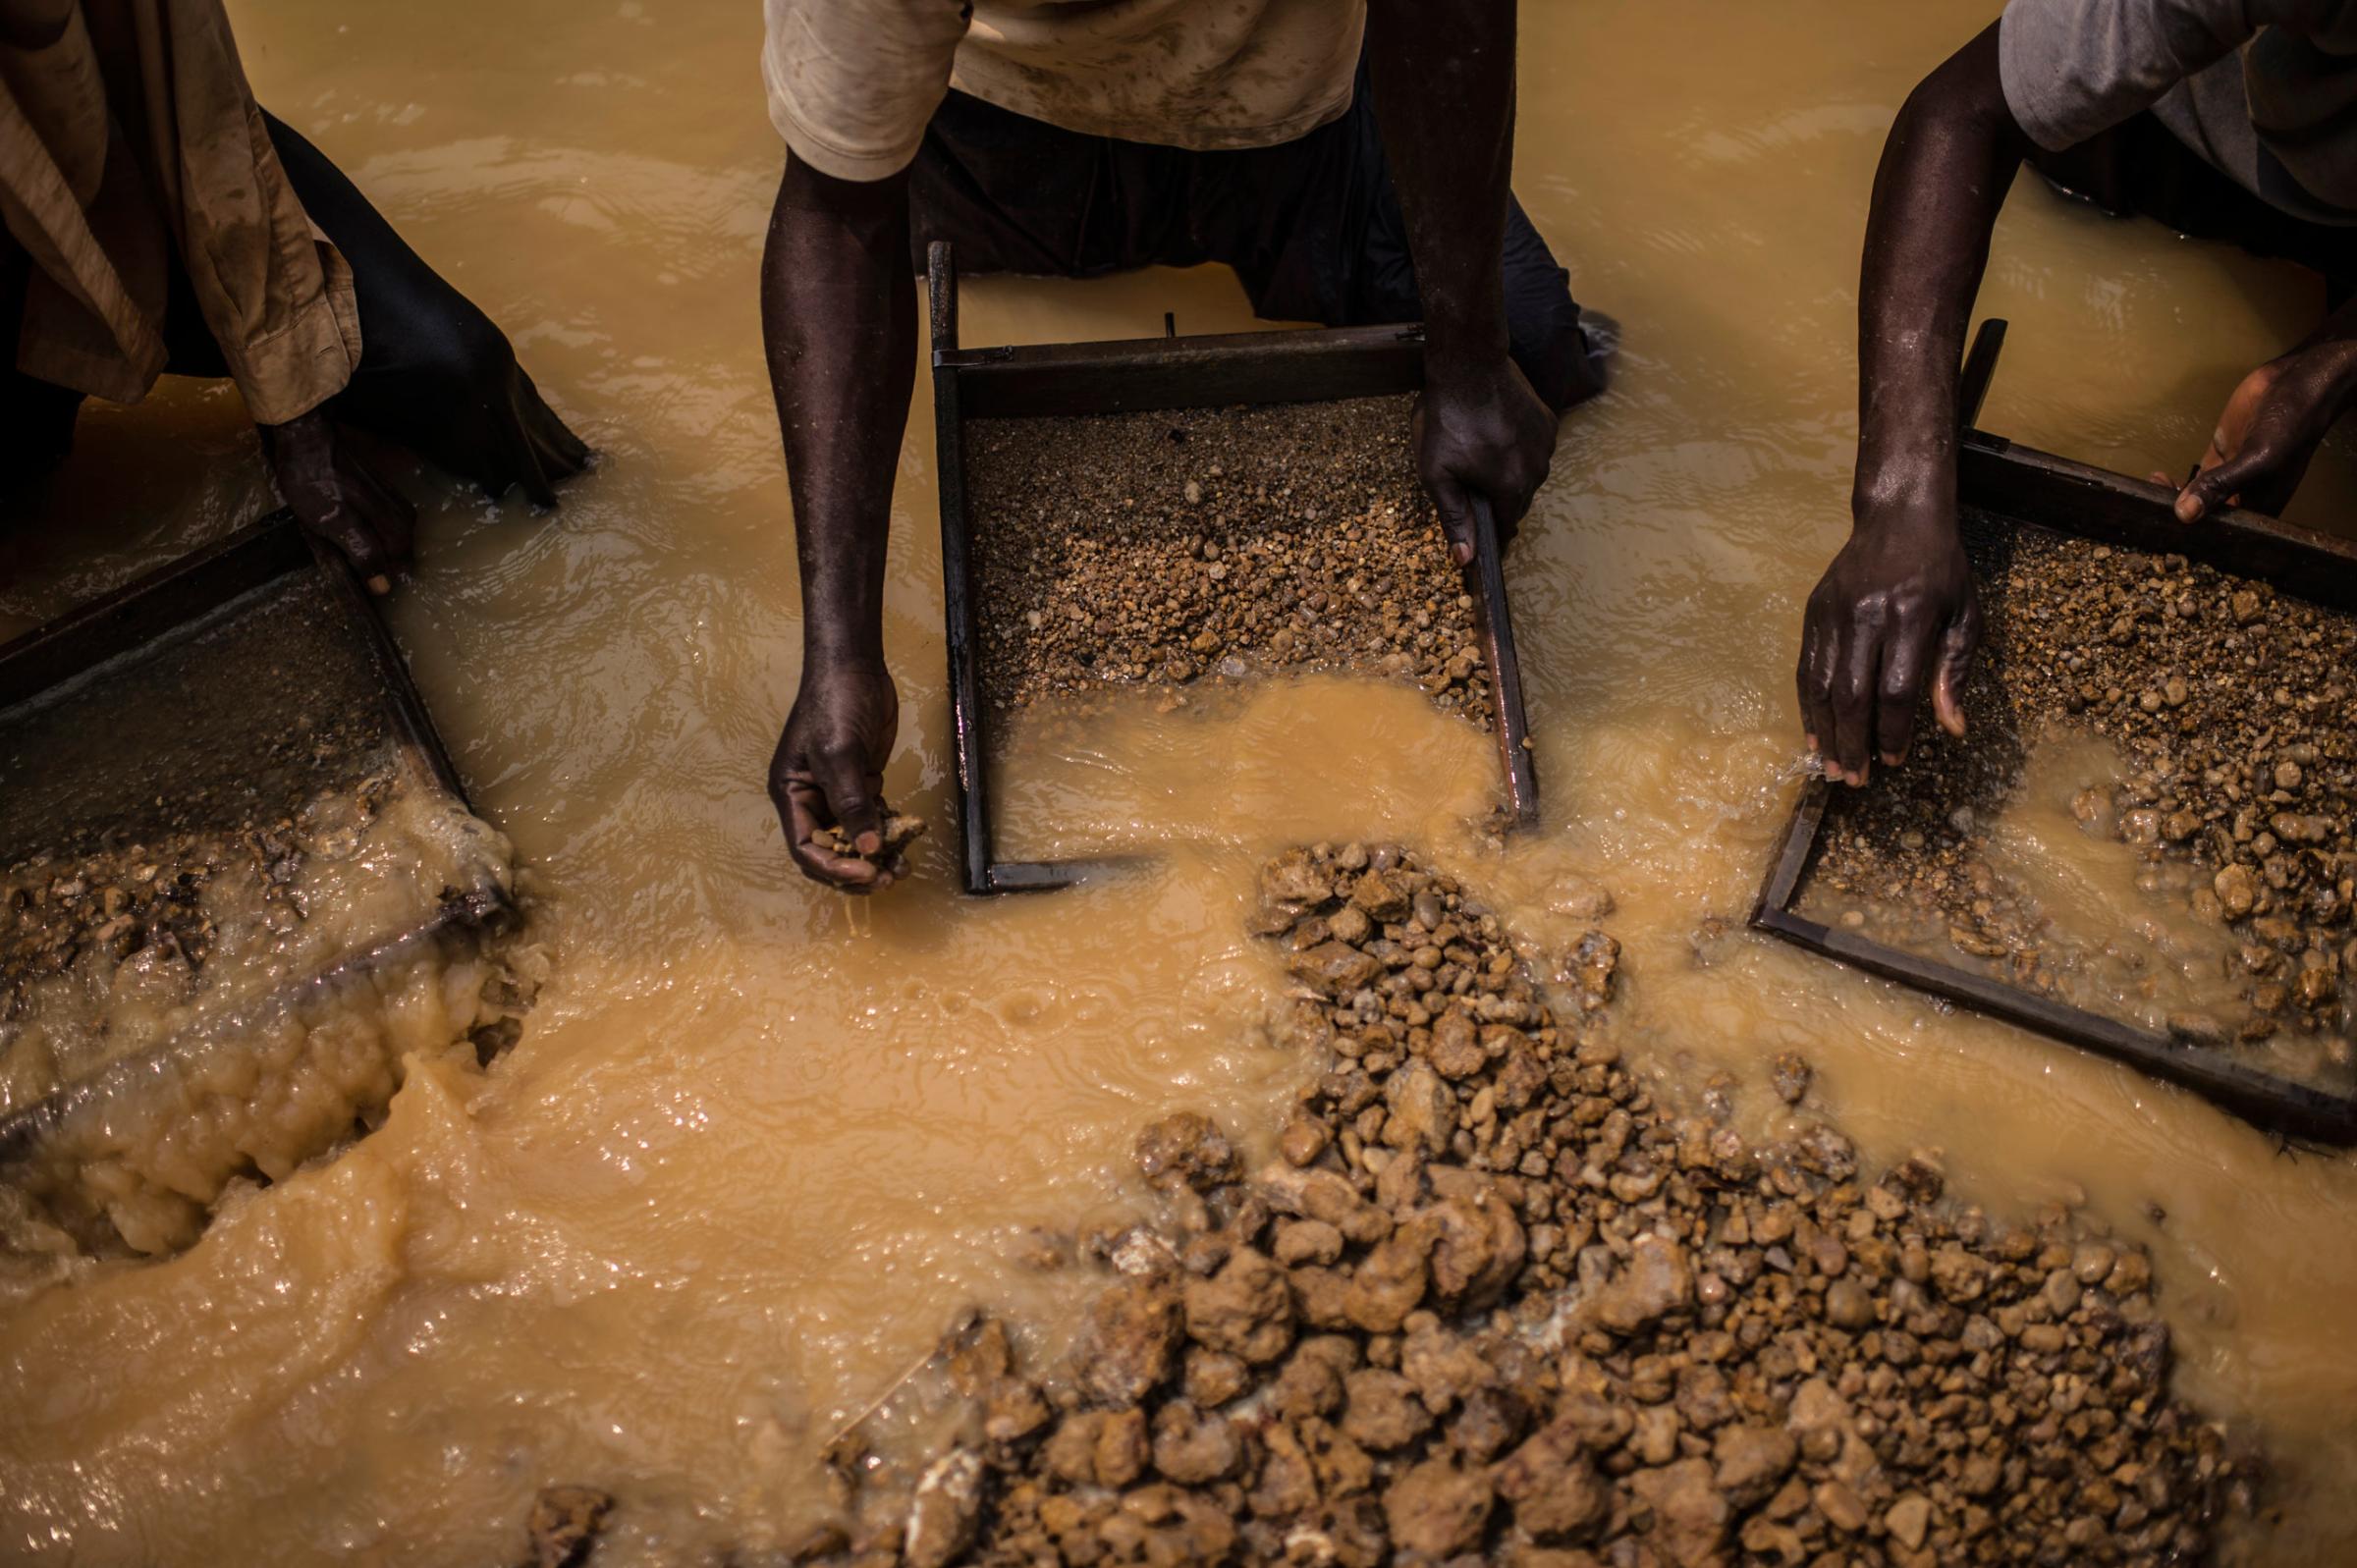 Diamond mining in the Democratic Republic of Congo